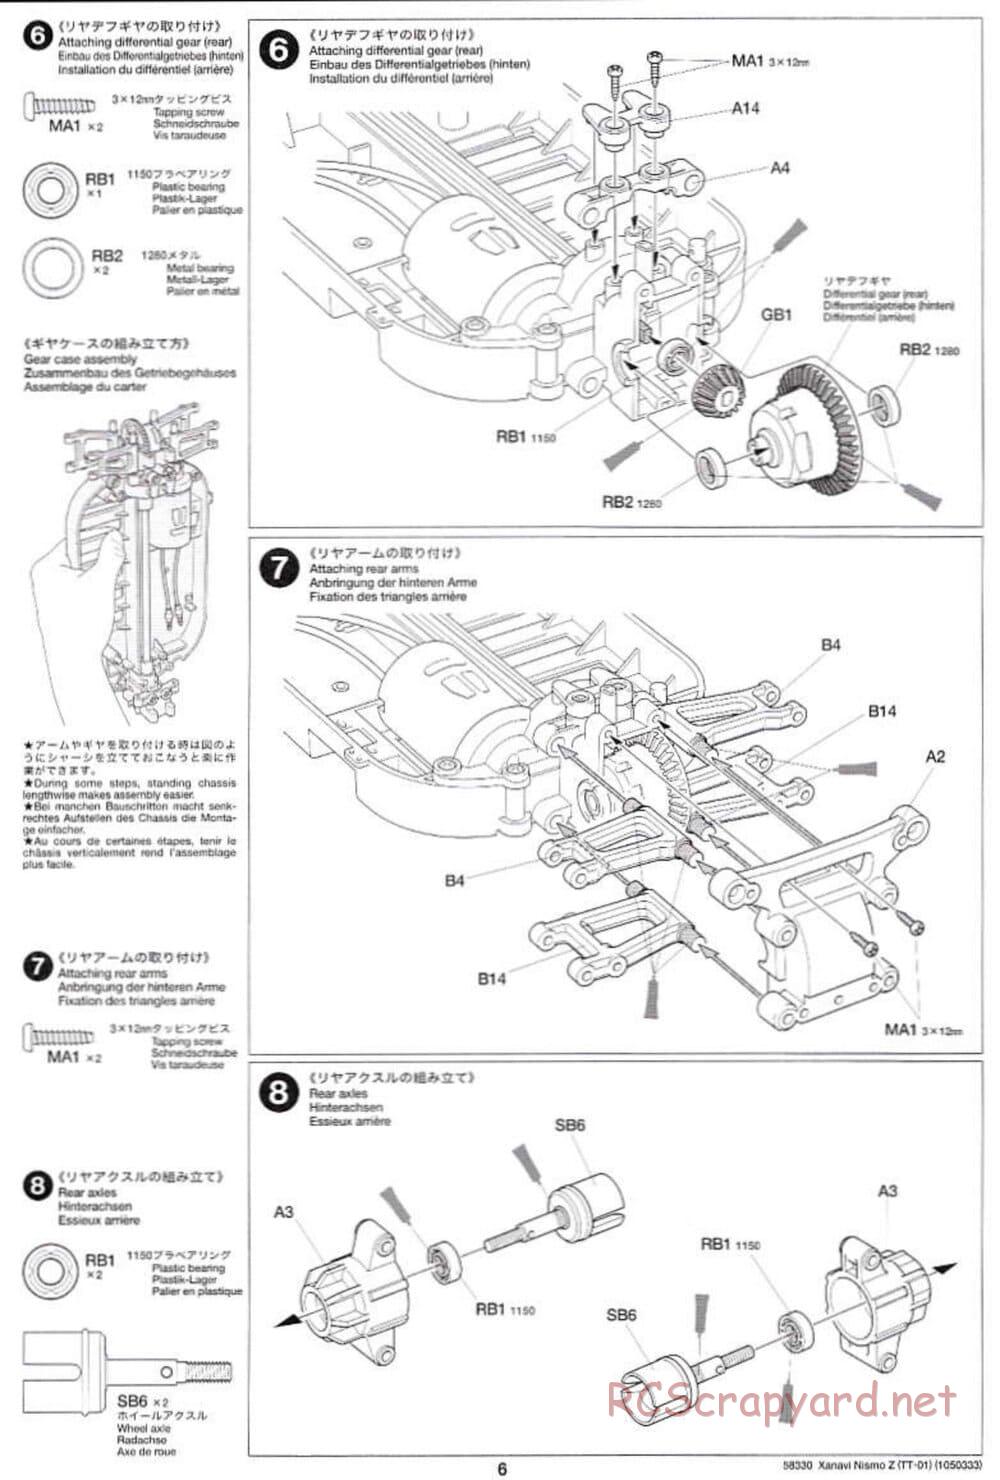 Tamiya - Xanavi Nismo Z - TT-01 Chassis - Manual - Page 6